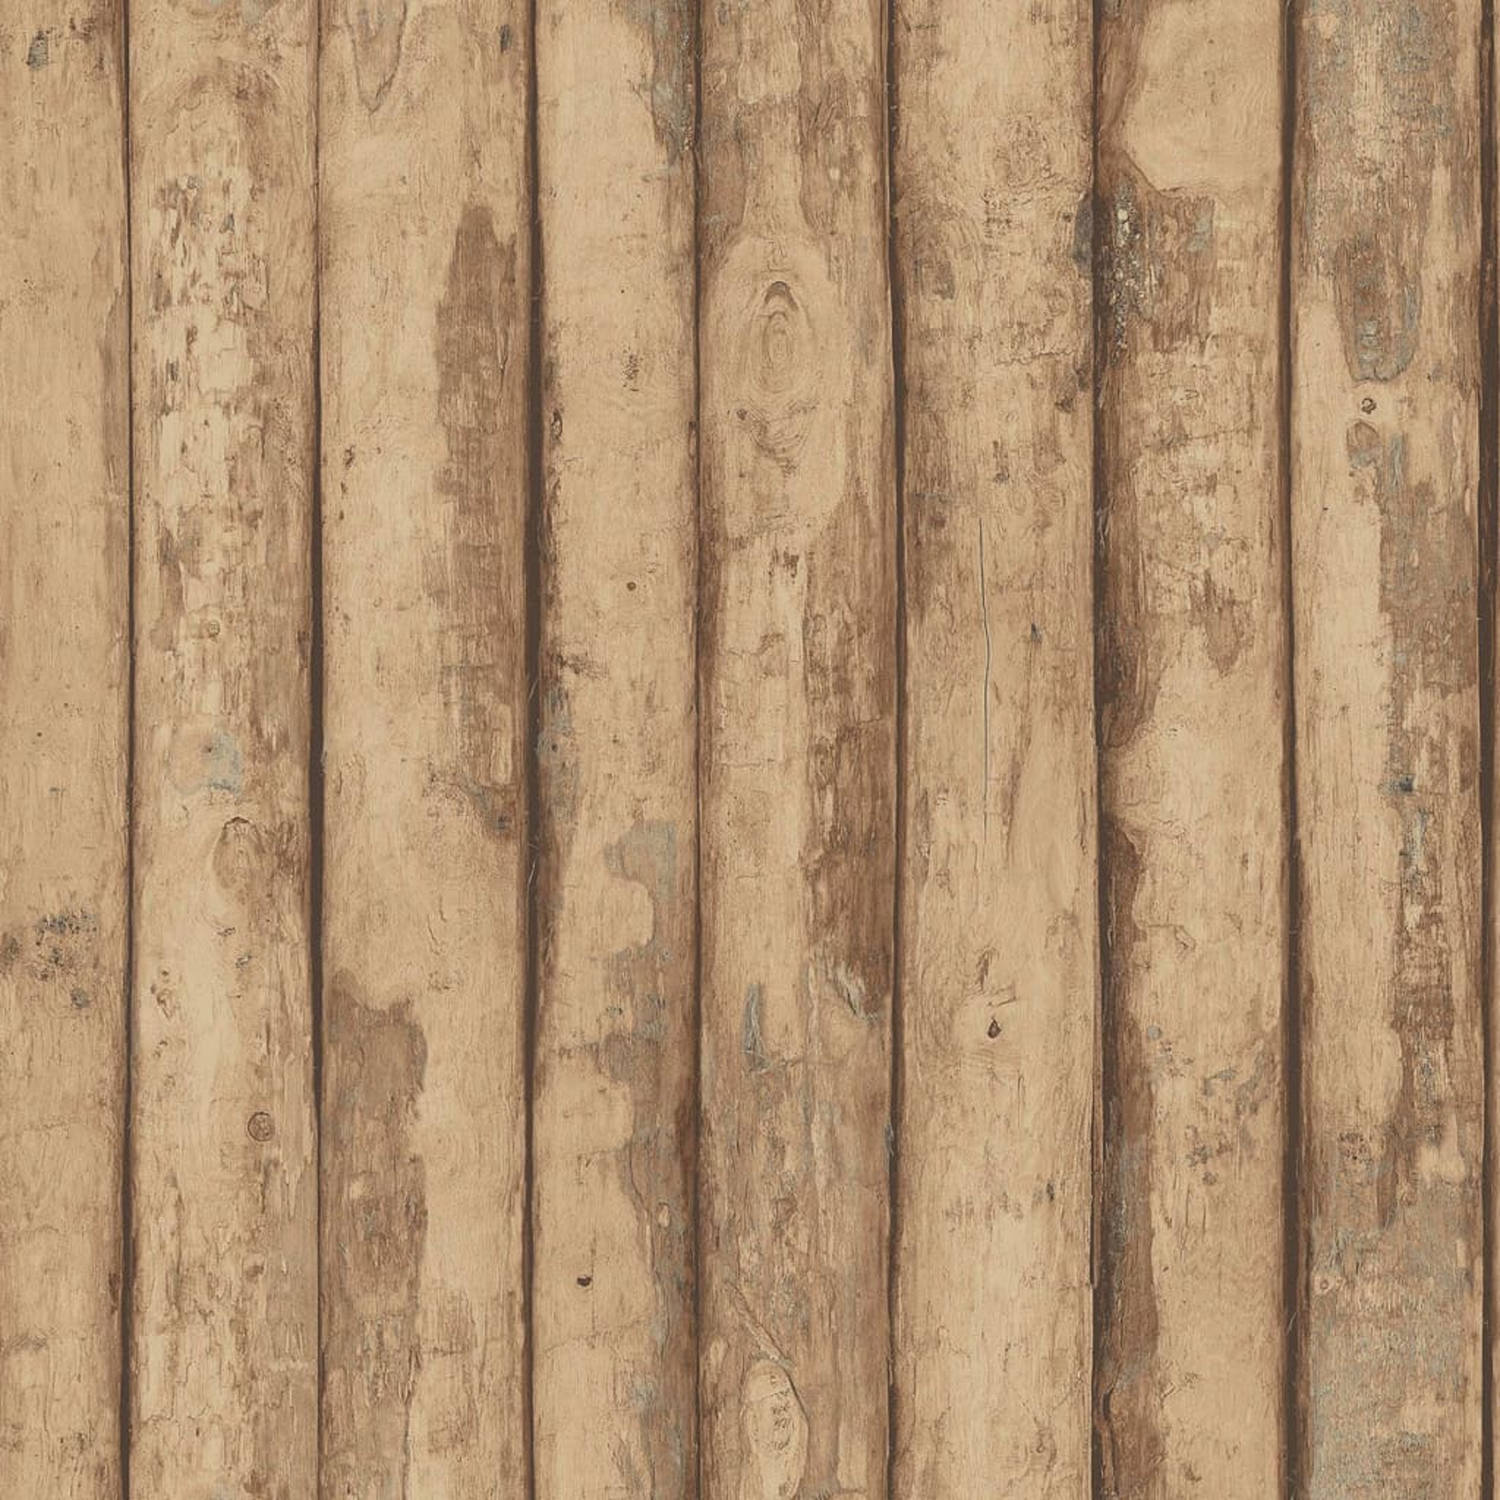 Homestyle Behang Old Wood bruin